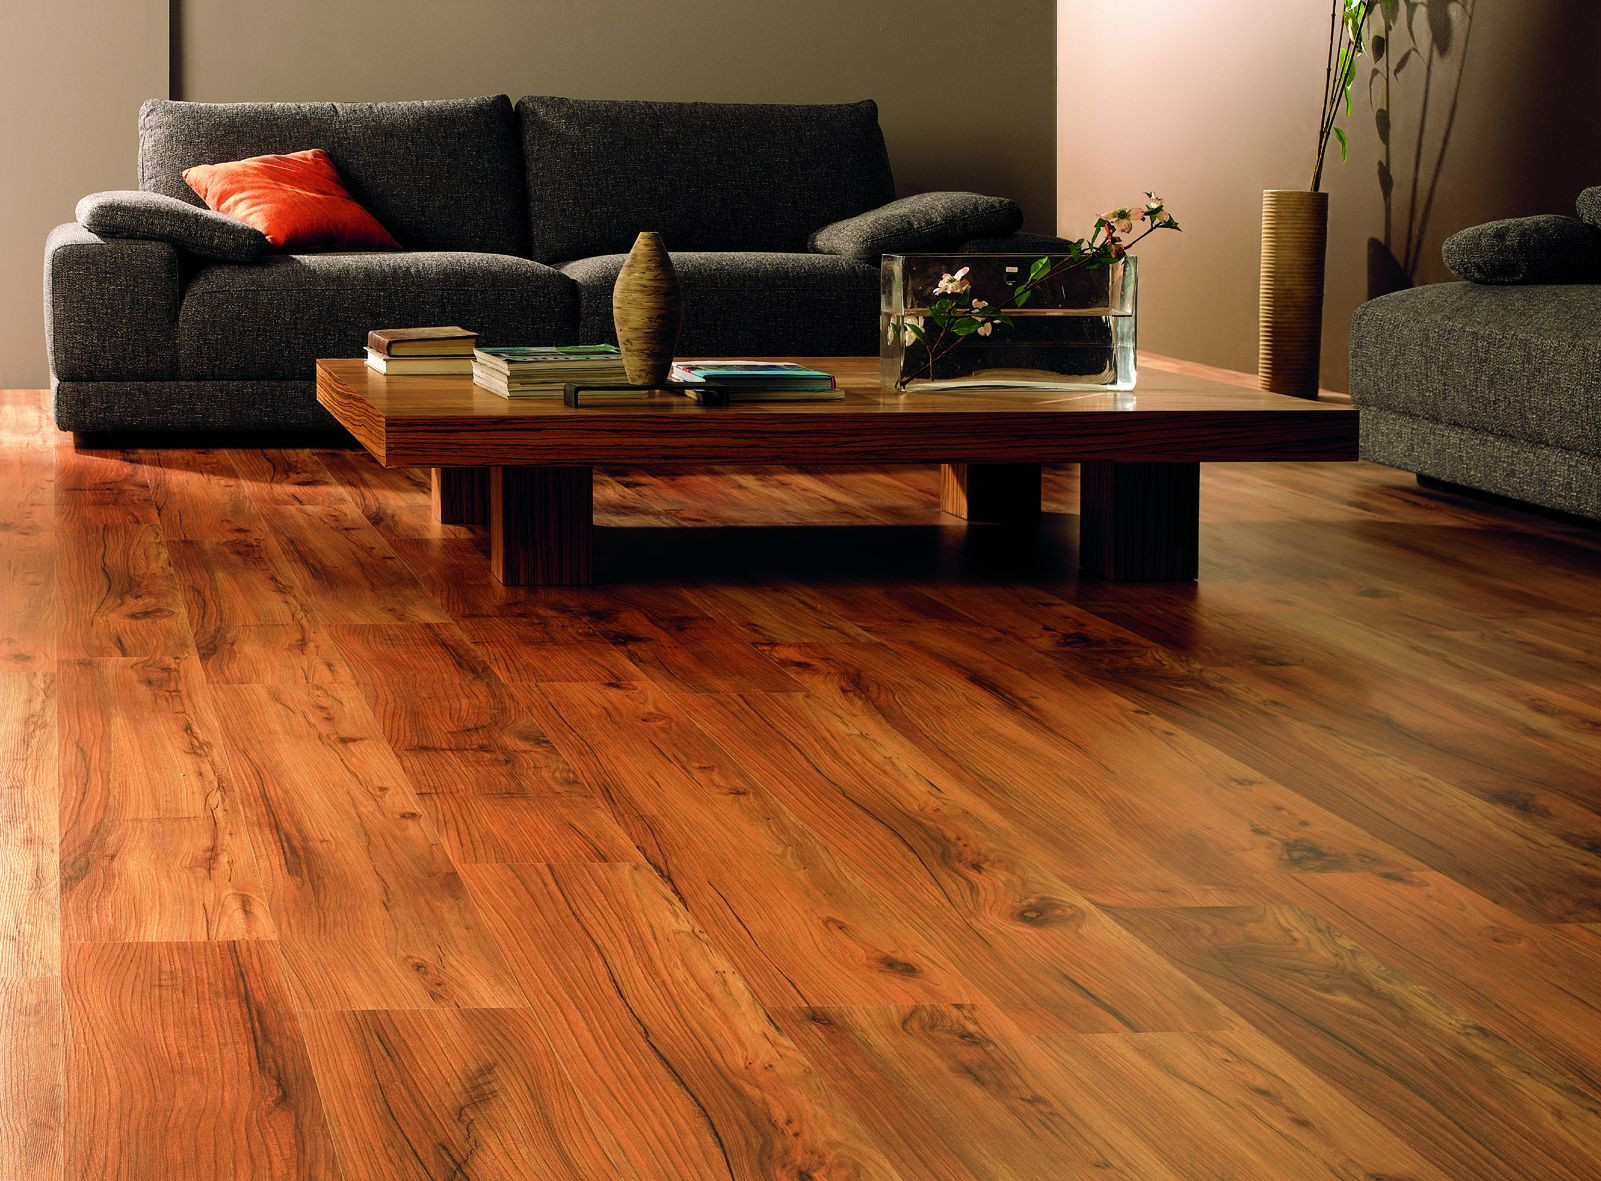 Wood Flooring Living Room Ideas
 How Can I Make Wood Flooring Be es More Shiny